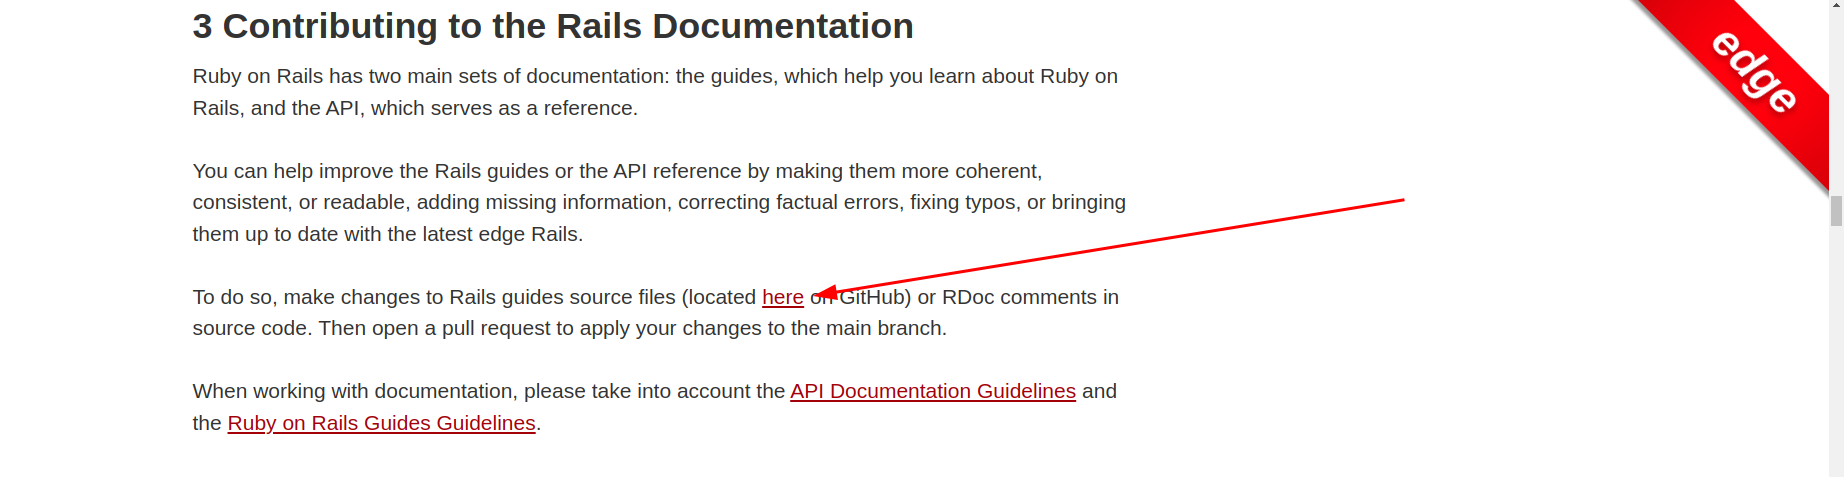 https://edgeguides.rubyonrails.org/contributing_to_ruby_on_rails.html#contributing-to-the-rails-documentation